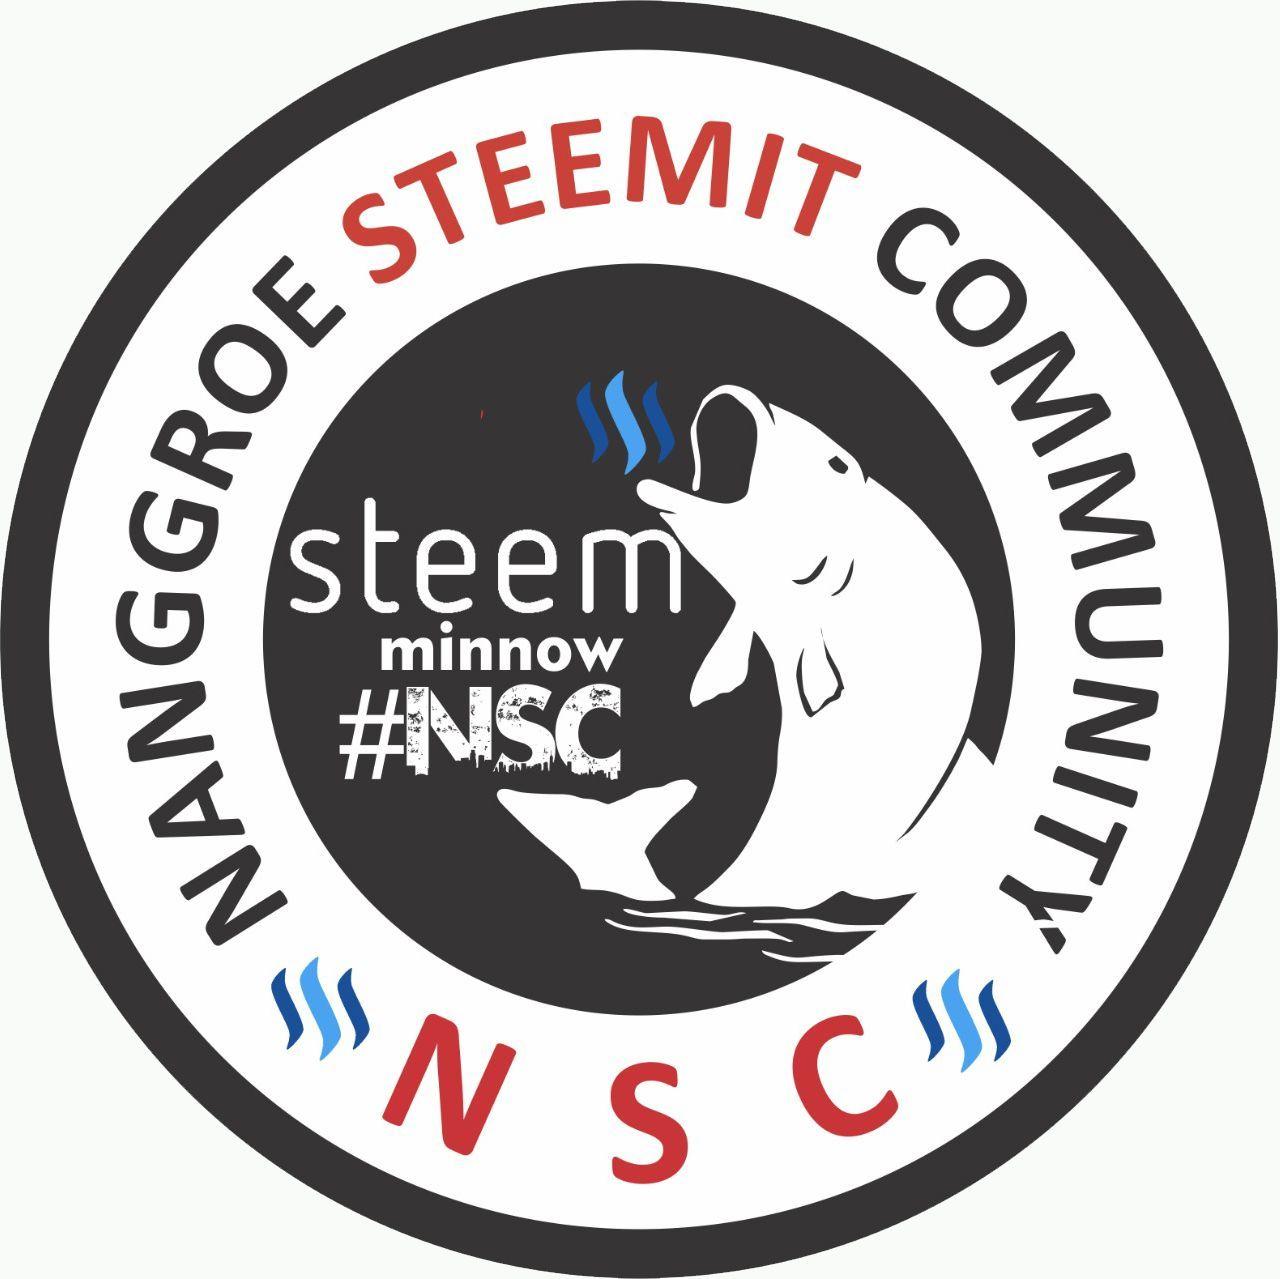 NSC Logo - The NSC logo is the Community Identity of the Nangggroe Steemit